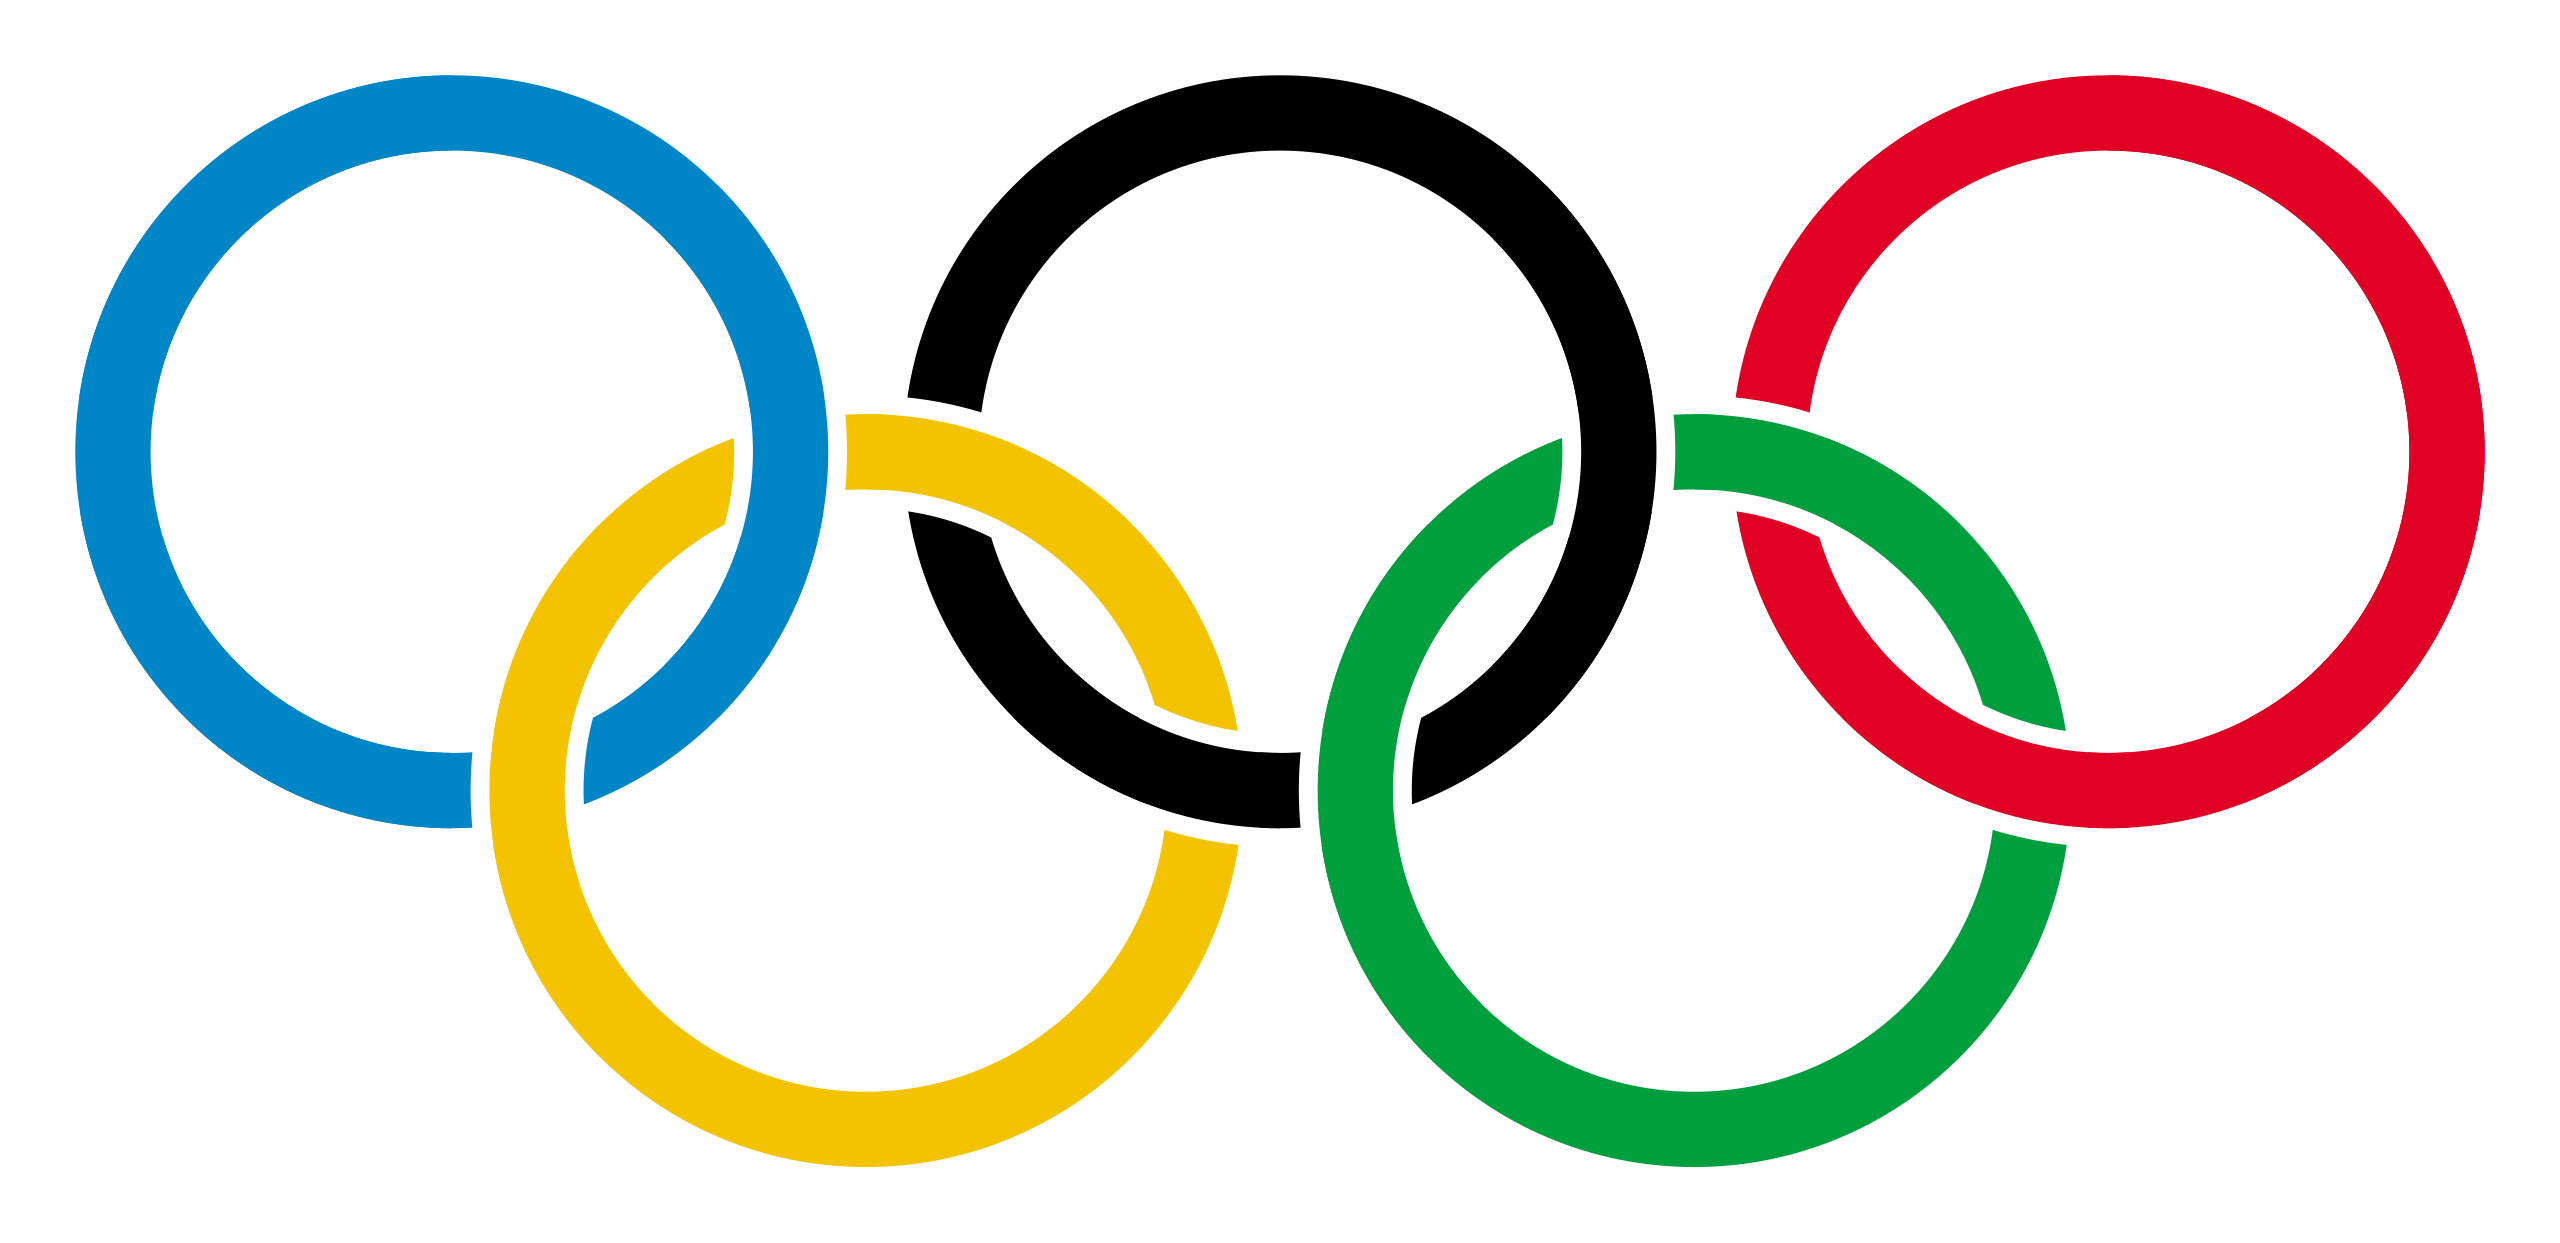 Olympic Vector Logo - Download Free SVG Icon | Worldvectorlogo